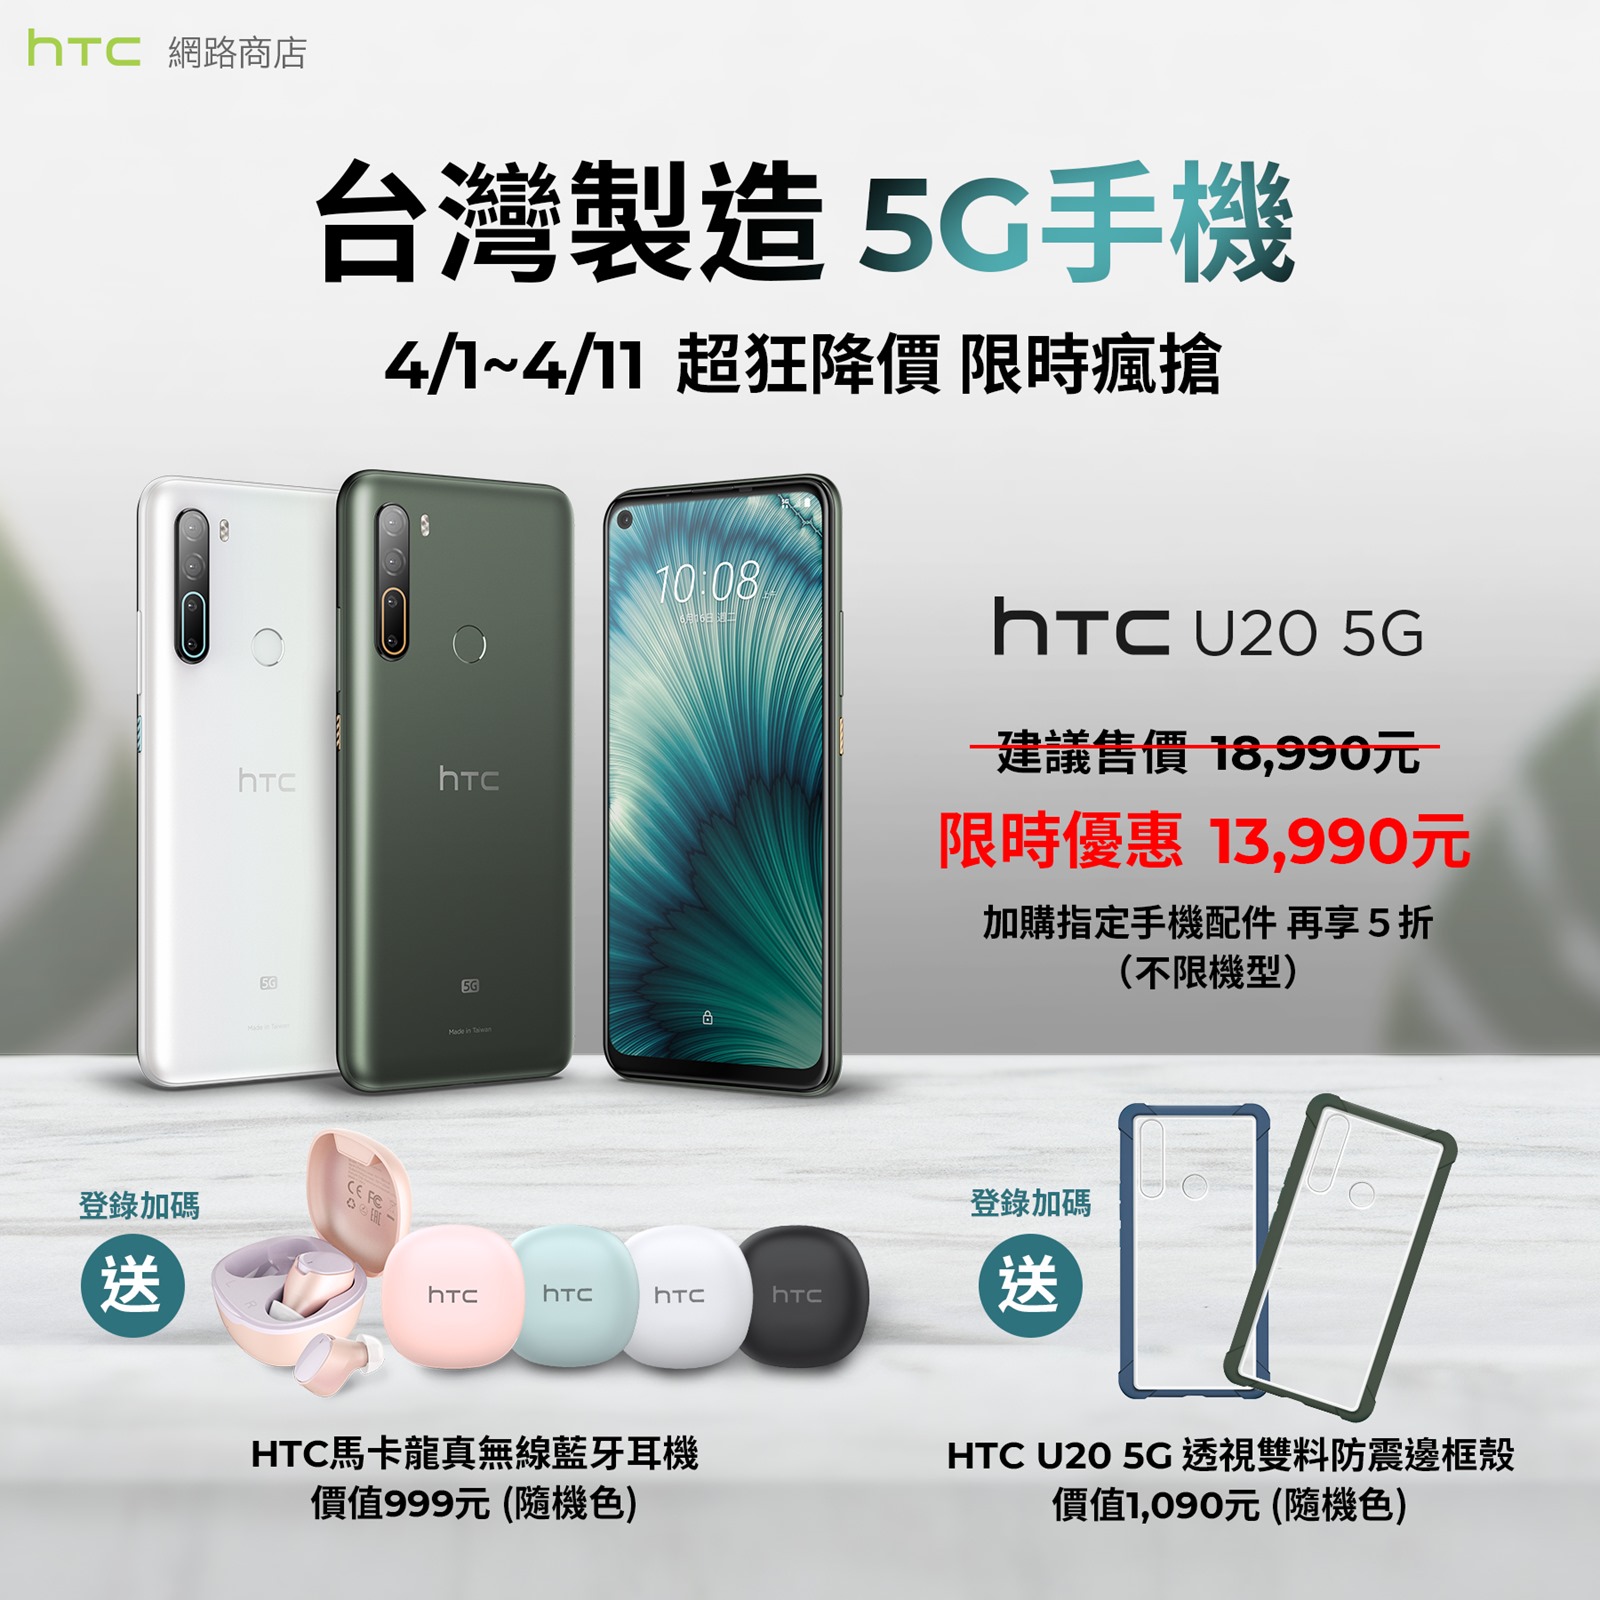 HTC 春季購物節開跑 4 月 1 日起 U20 5G 狂降 5,000 元 @3C 達人廖阿輝